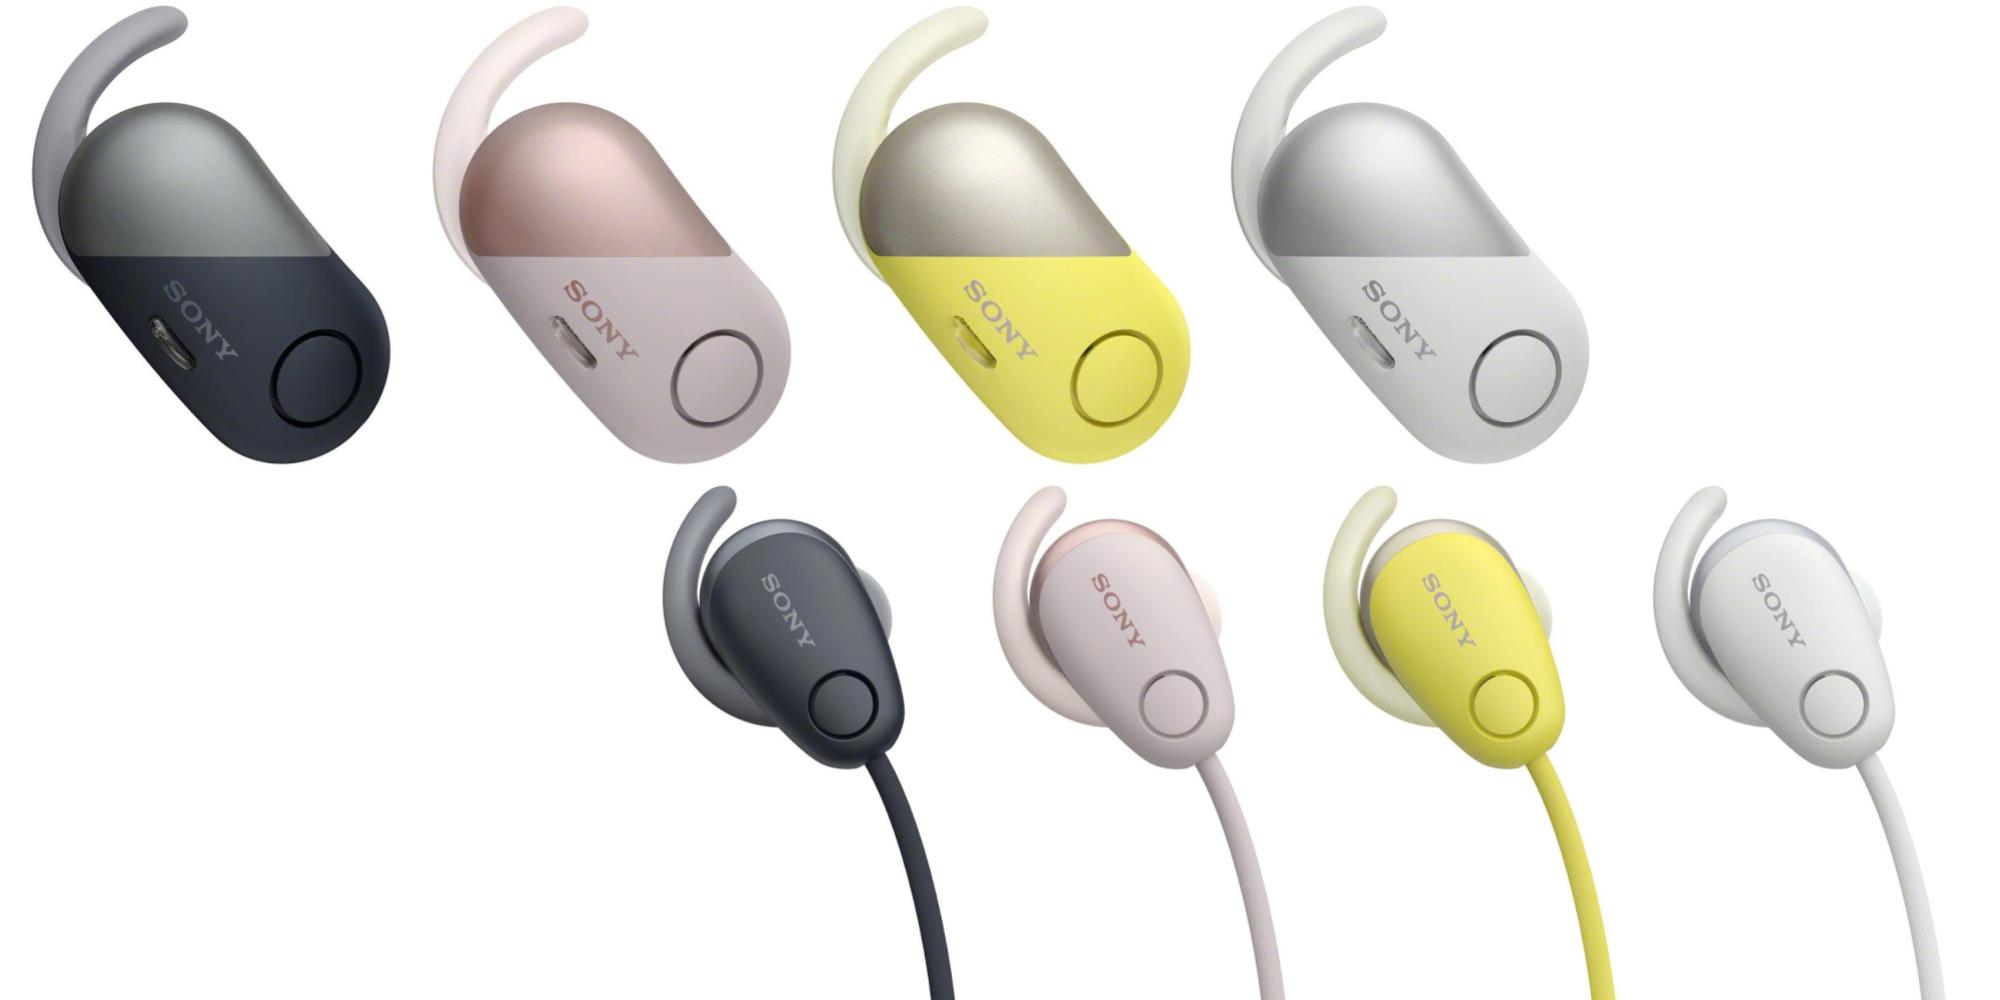 Sony adding Assistant to latest wireless earbuds, neckbuds ...